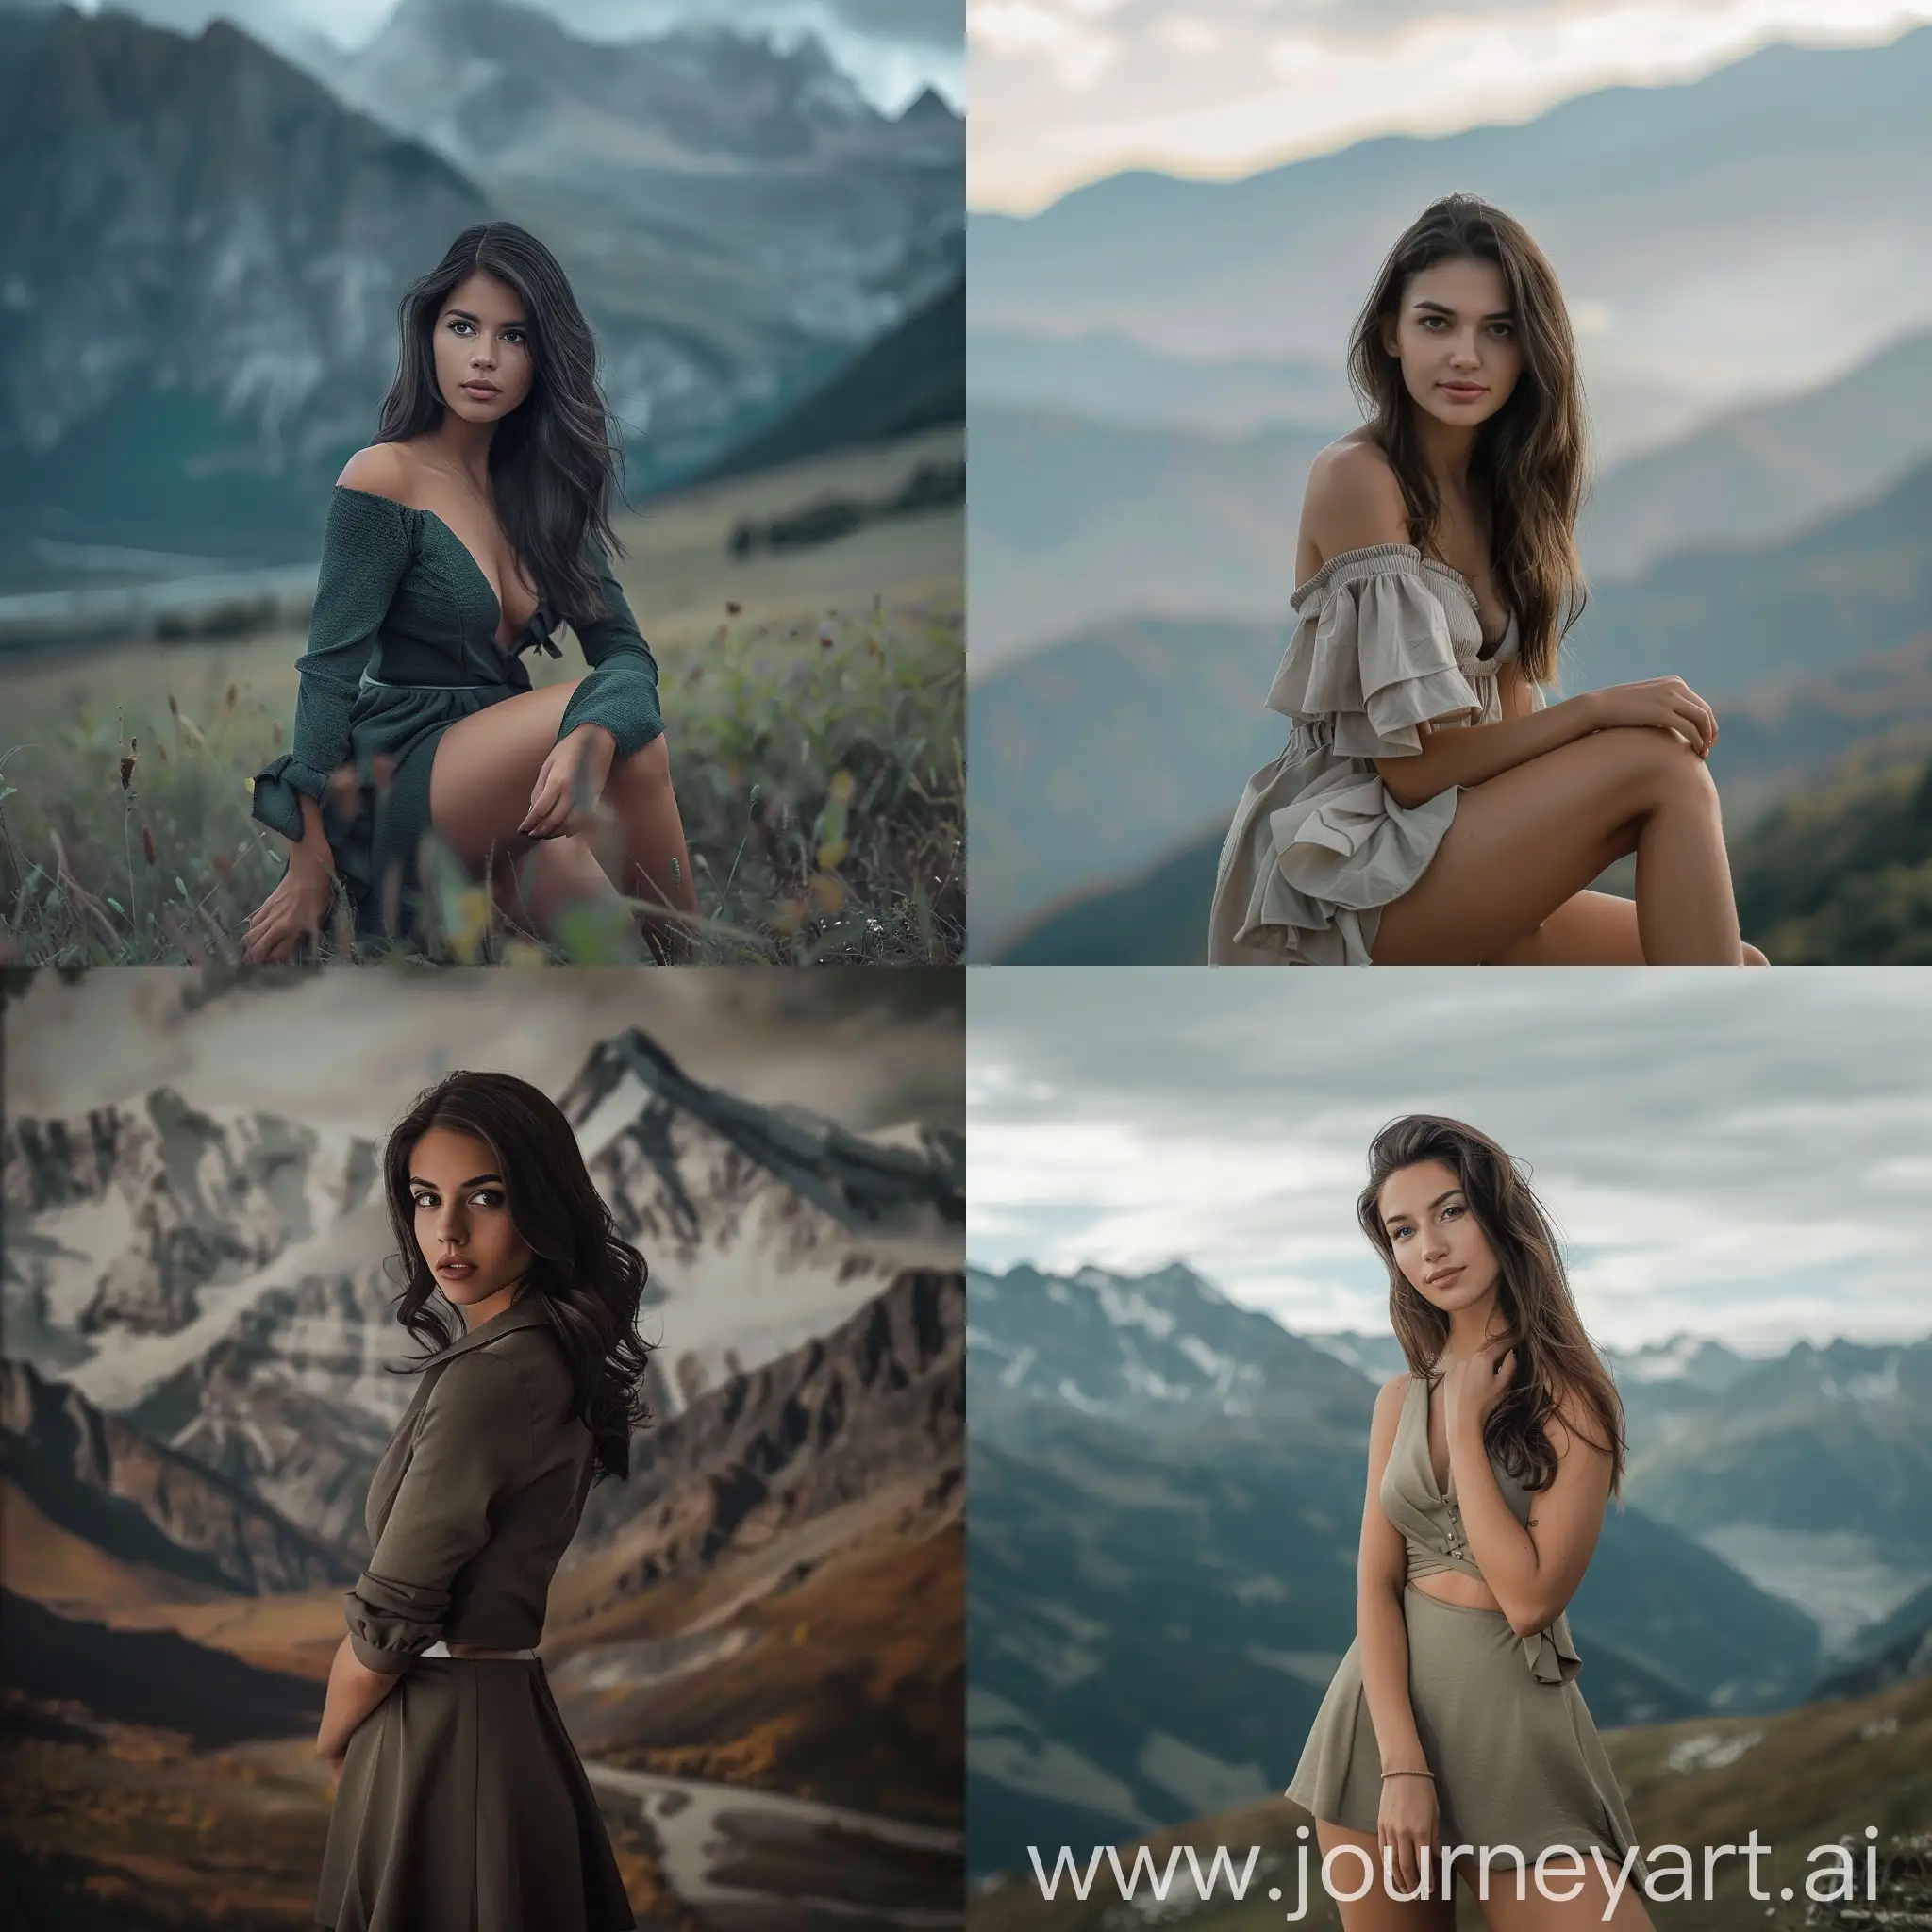 Brunette-Woman-in-KneeLength-Dress-with-Majestic-Mountain-Backdrop